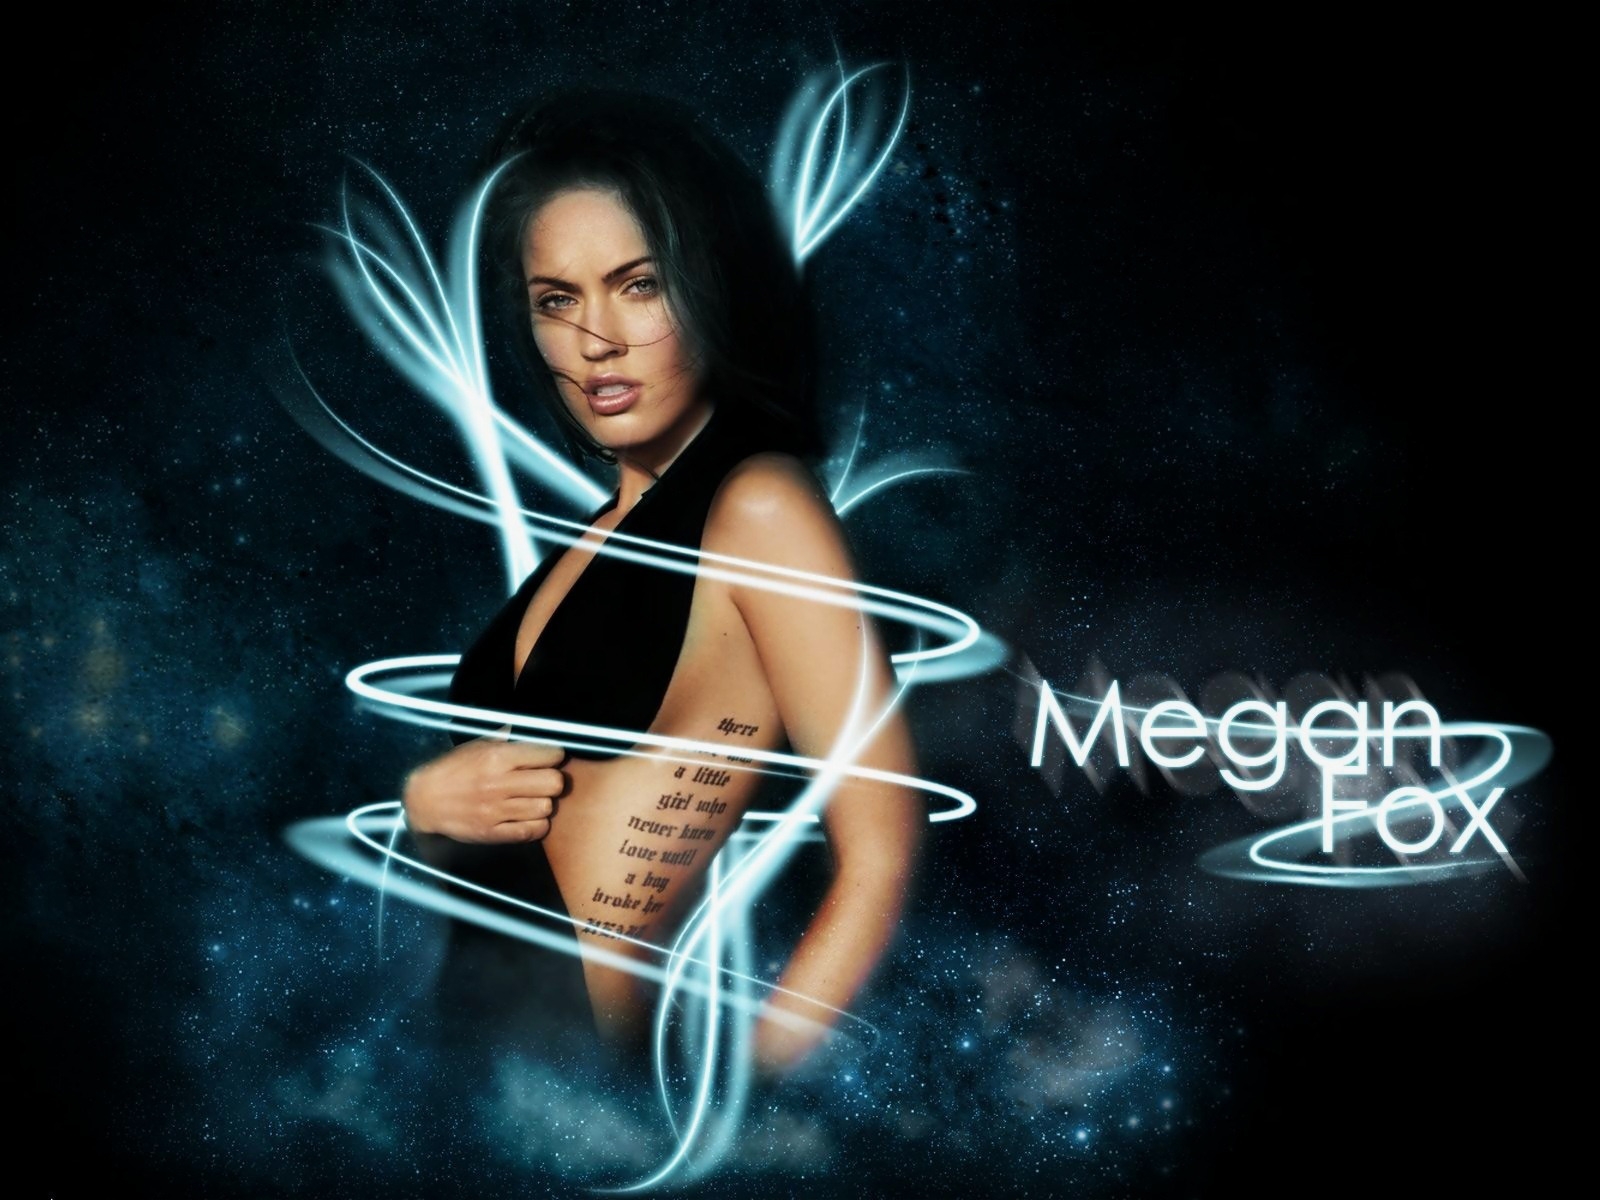 Megan Fox Between Light for 1600 x 1200 resolution